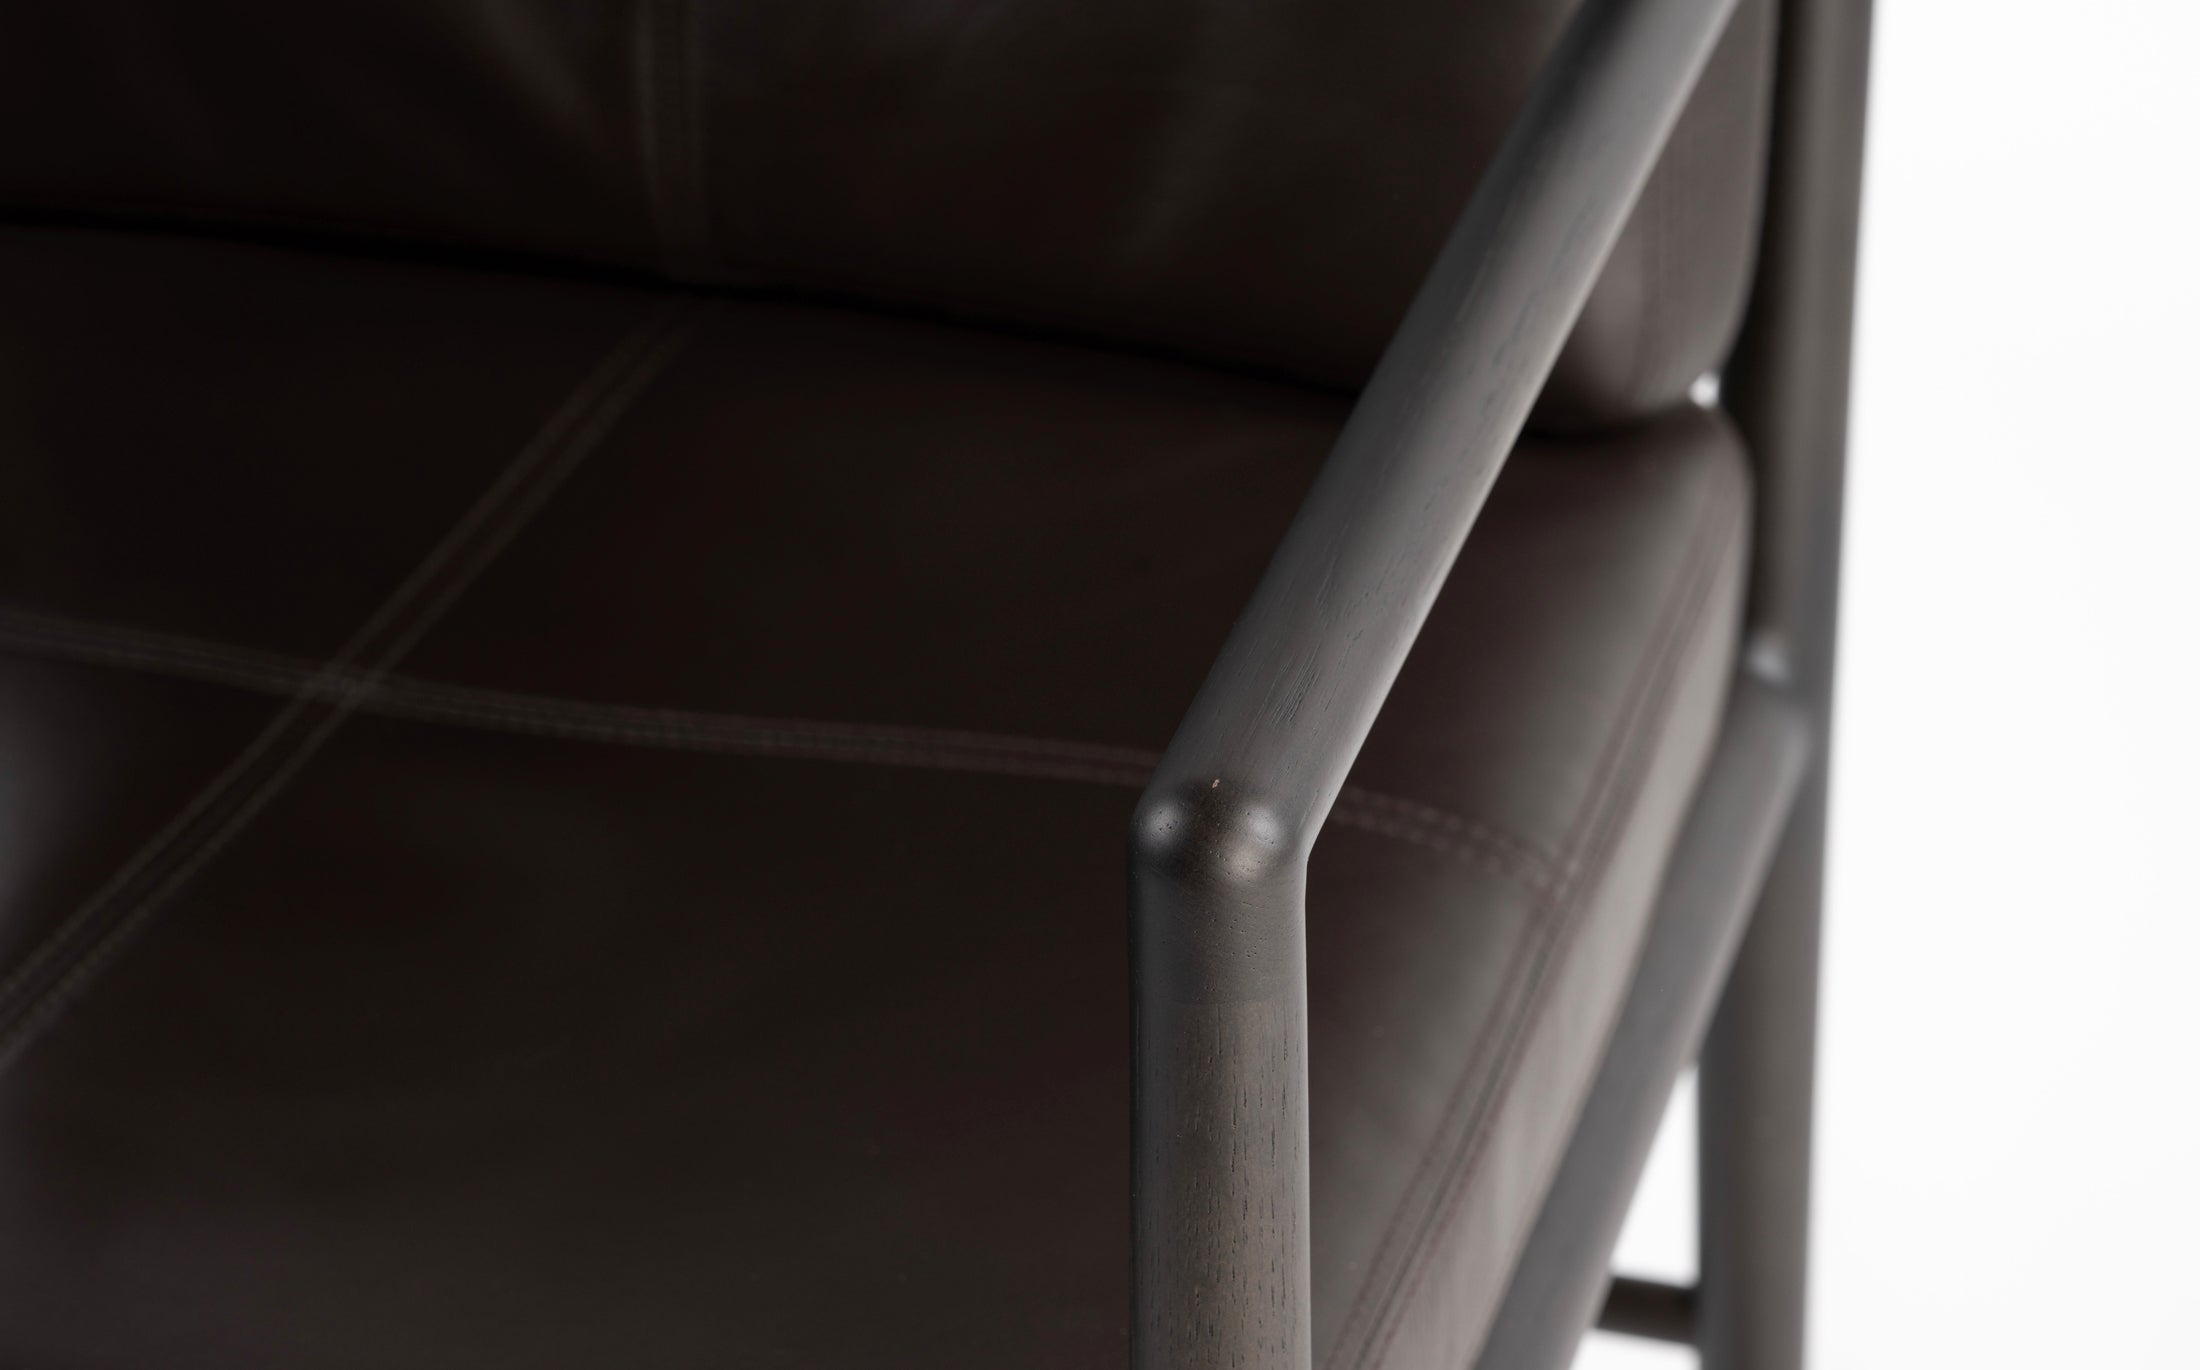 The sensitive comfortable armchair - Charcoal grey